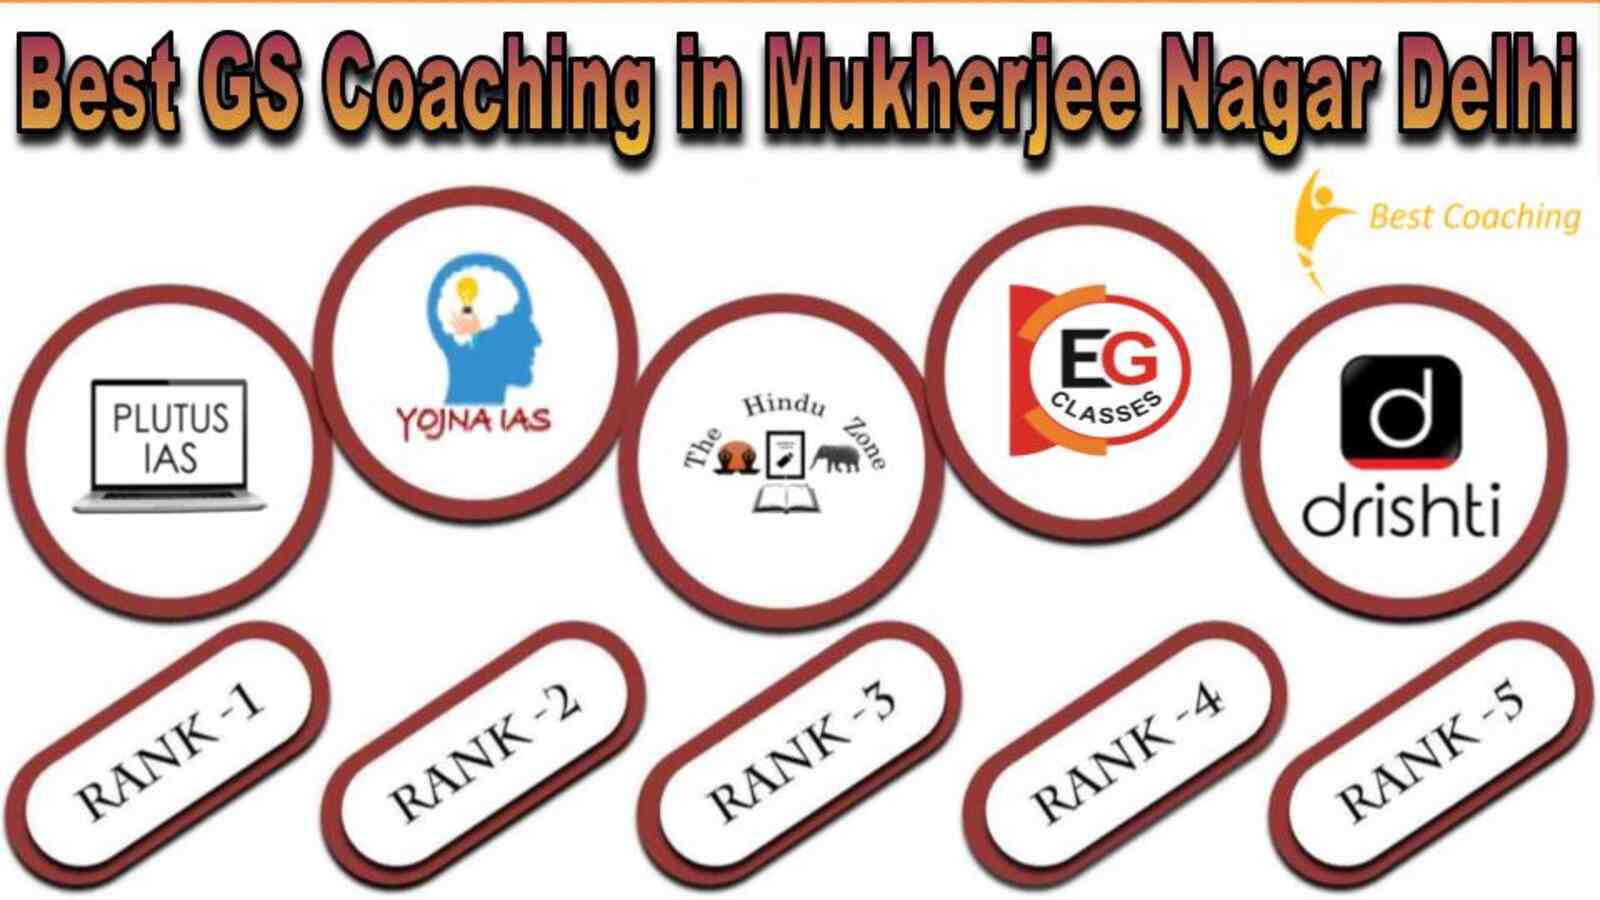 Best GS Coaching in Mukherjee Nagar Delhi